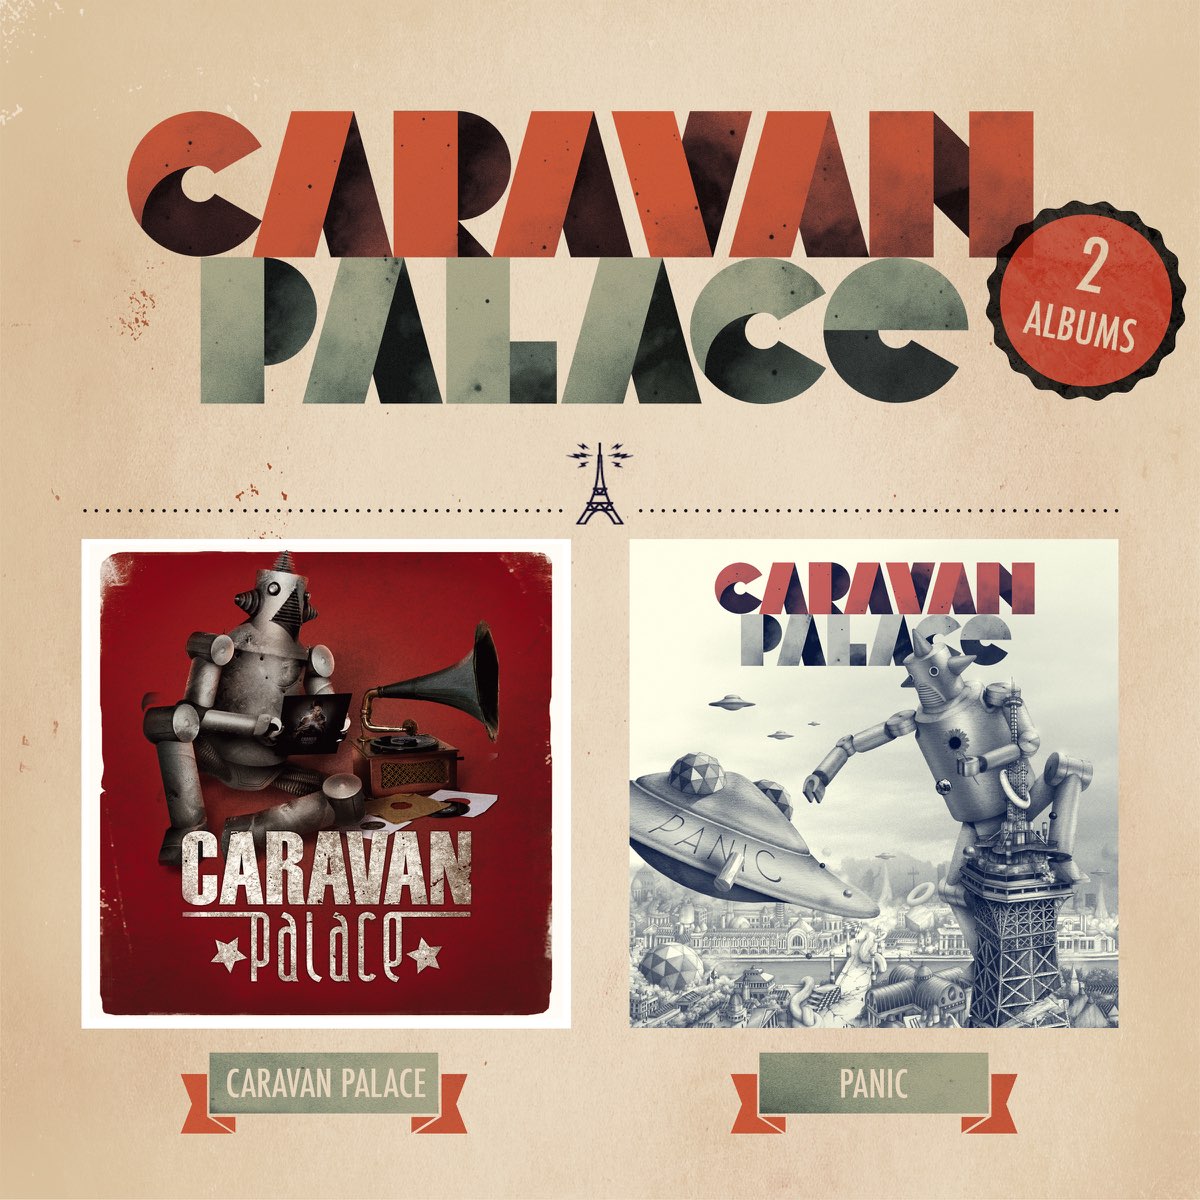 Brotherswing. Caravan Palace album. Caravan Palace Panic. Caravan Palace / Panic (2 albums). Caravan Caravan album.